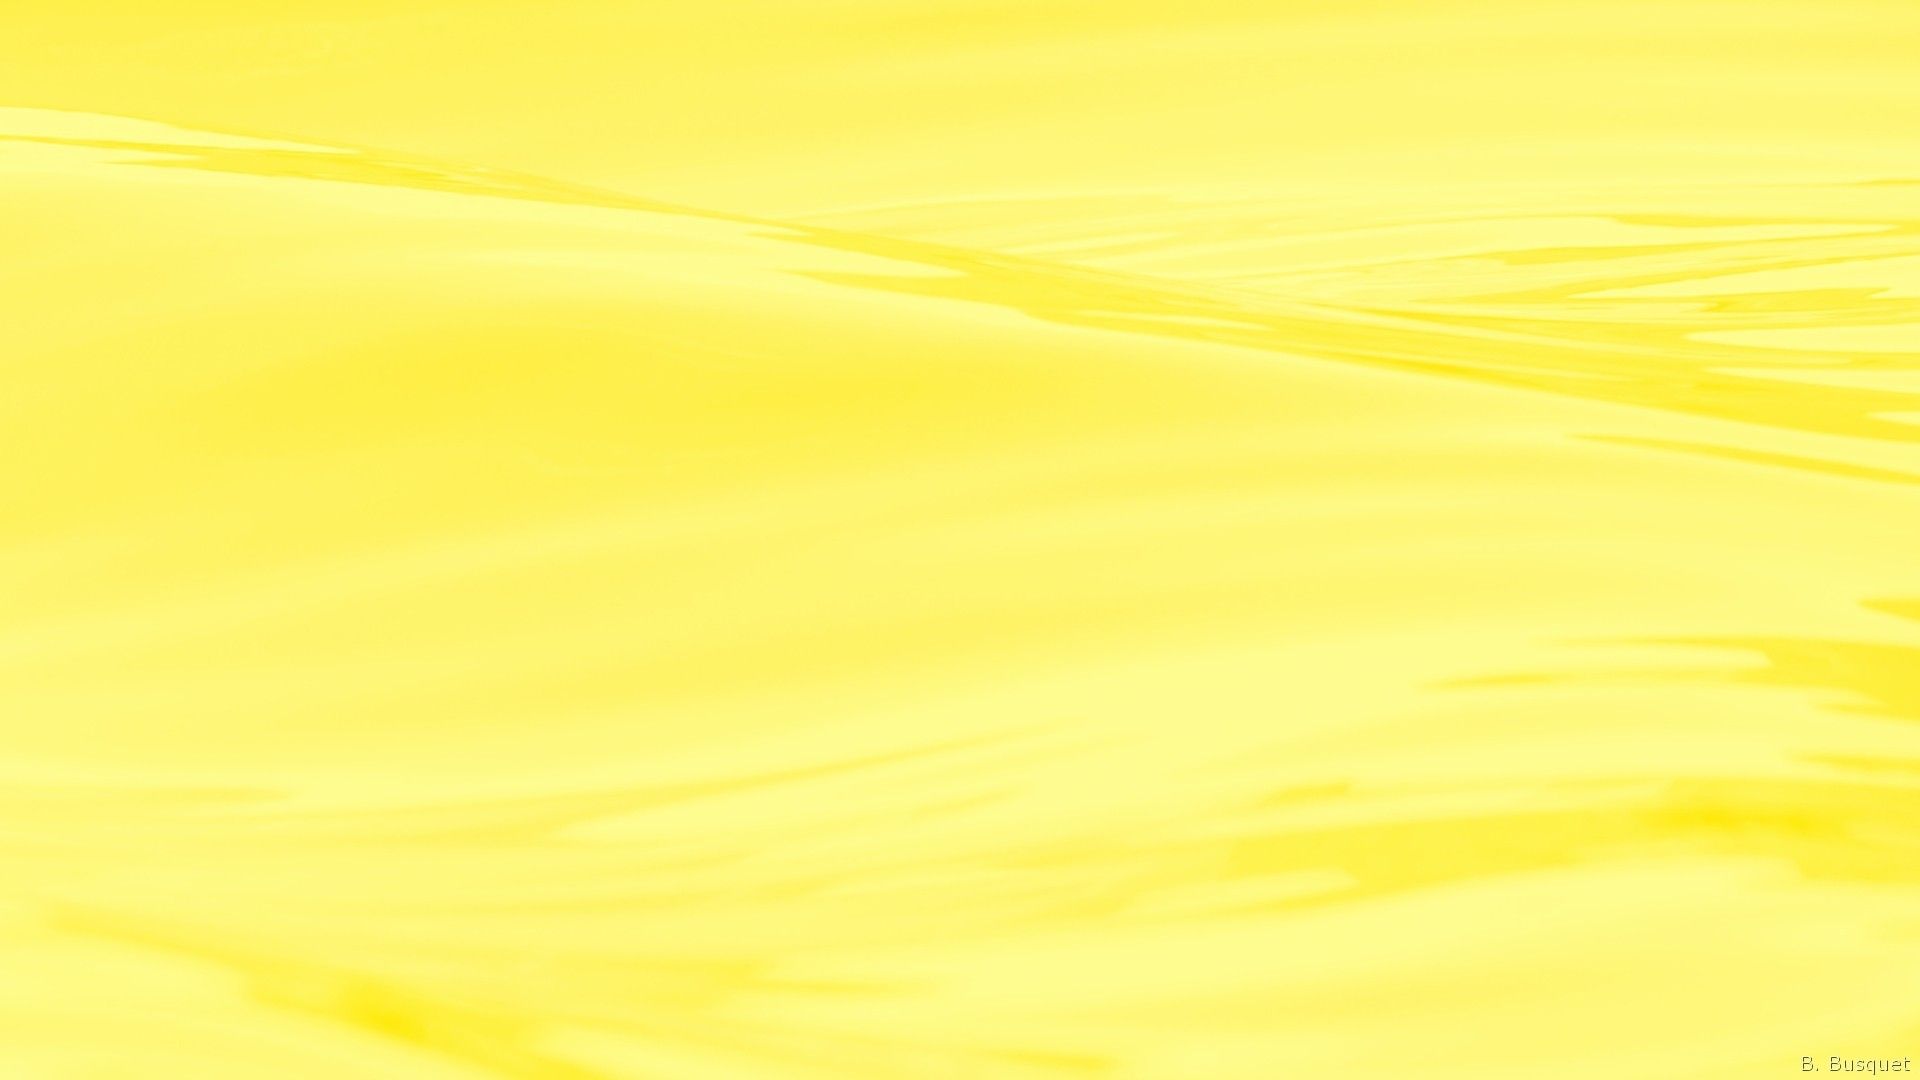 Aesthetic yellow laptop wallpaper